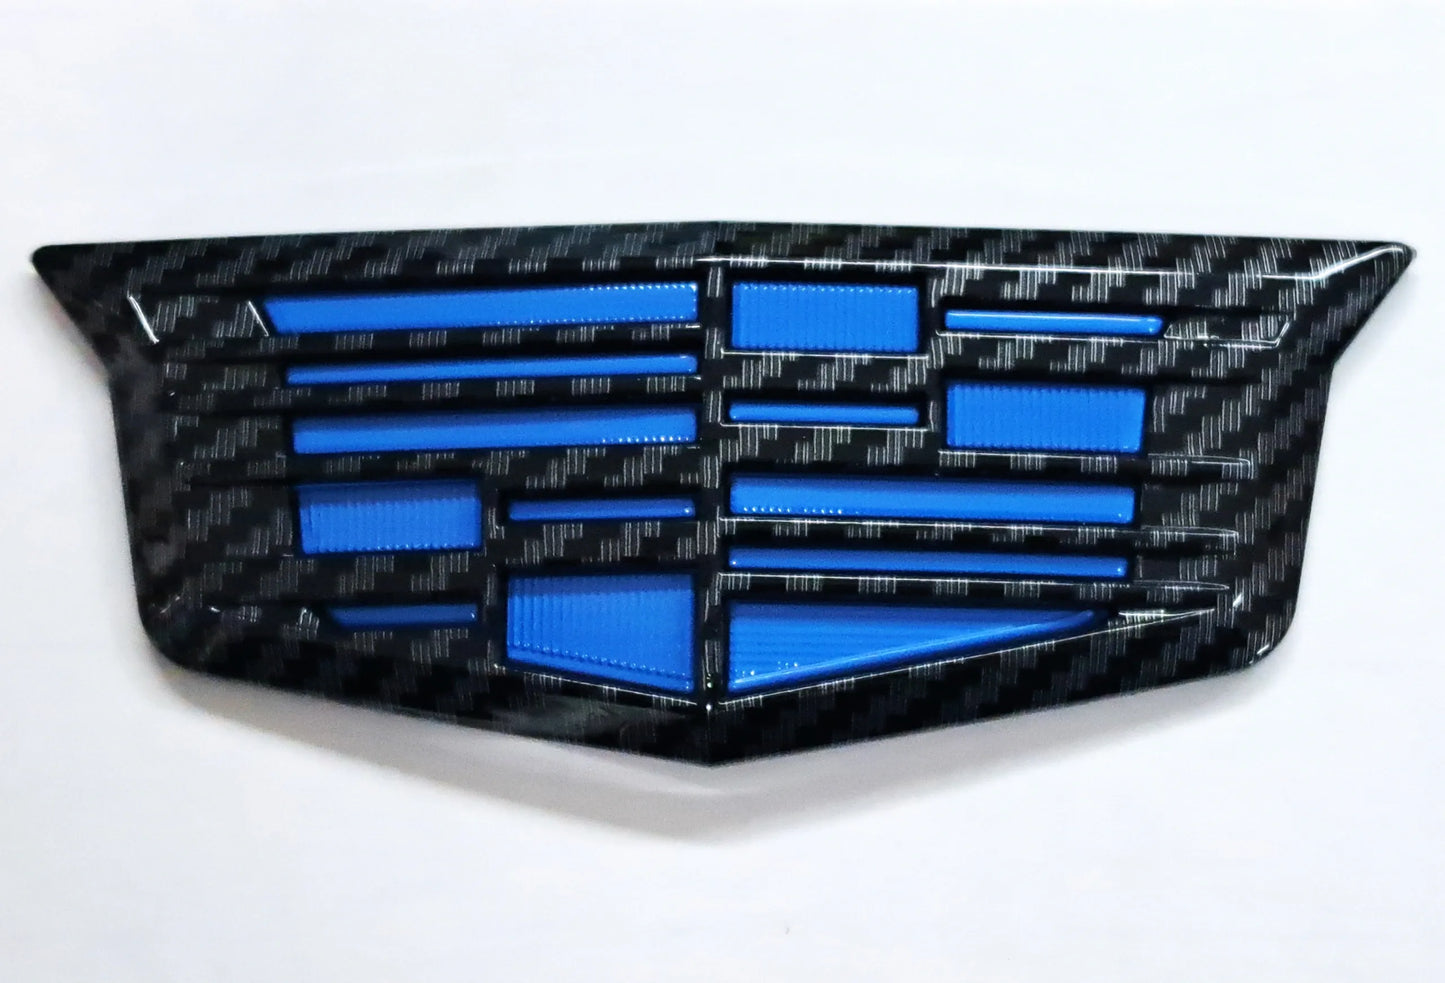 CT5 Rear Gloss Black or Carbon Fiber w/Electric Blue Center Cadillac Shield Emblem